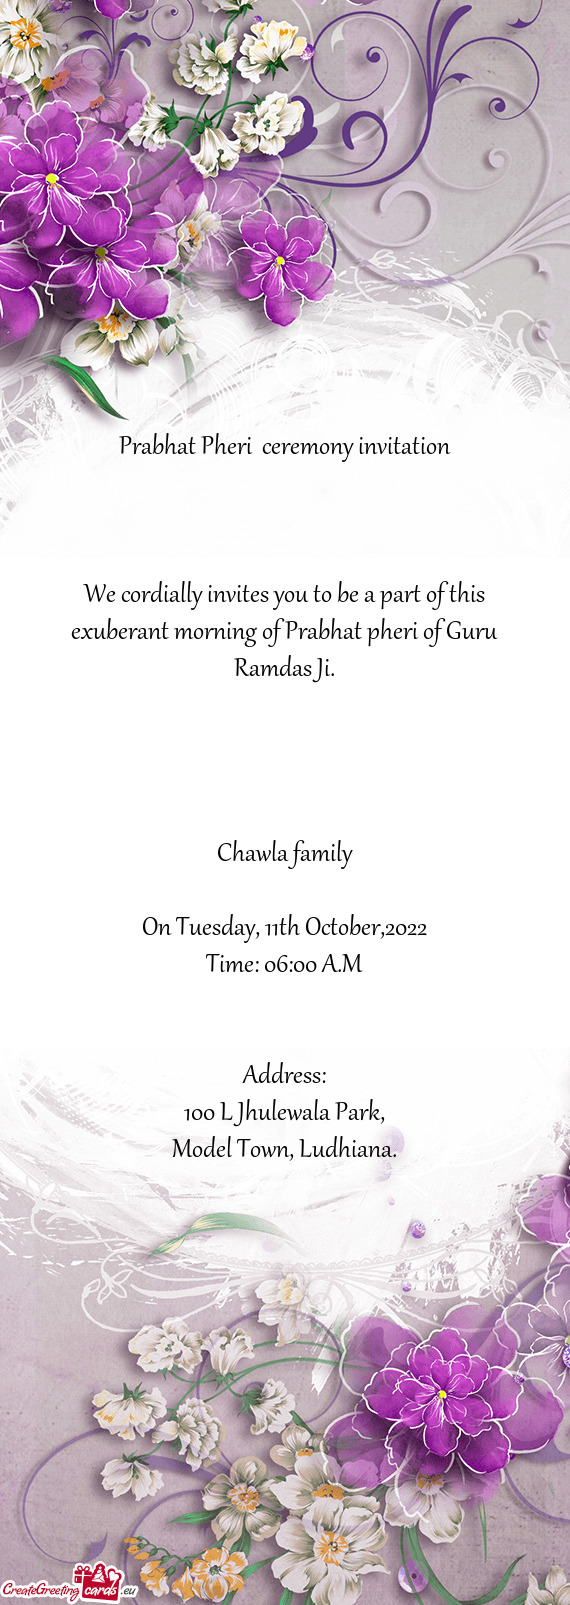 We cordially invites you to be a part of this exuberant morning of Prabhat pheri of Guru Ramdas Ji